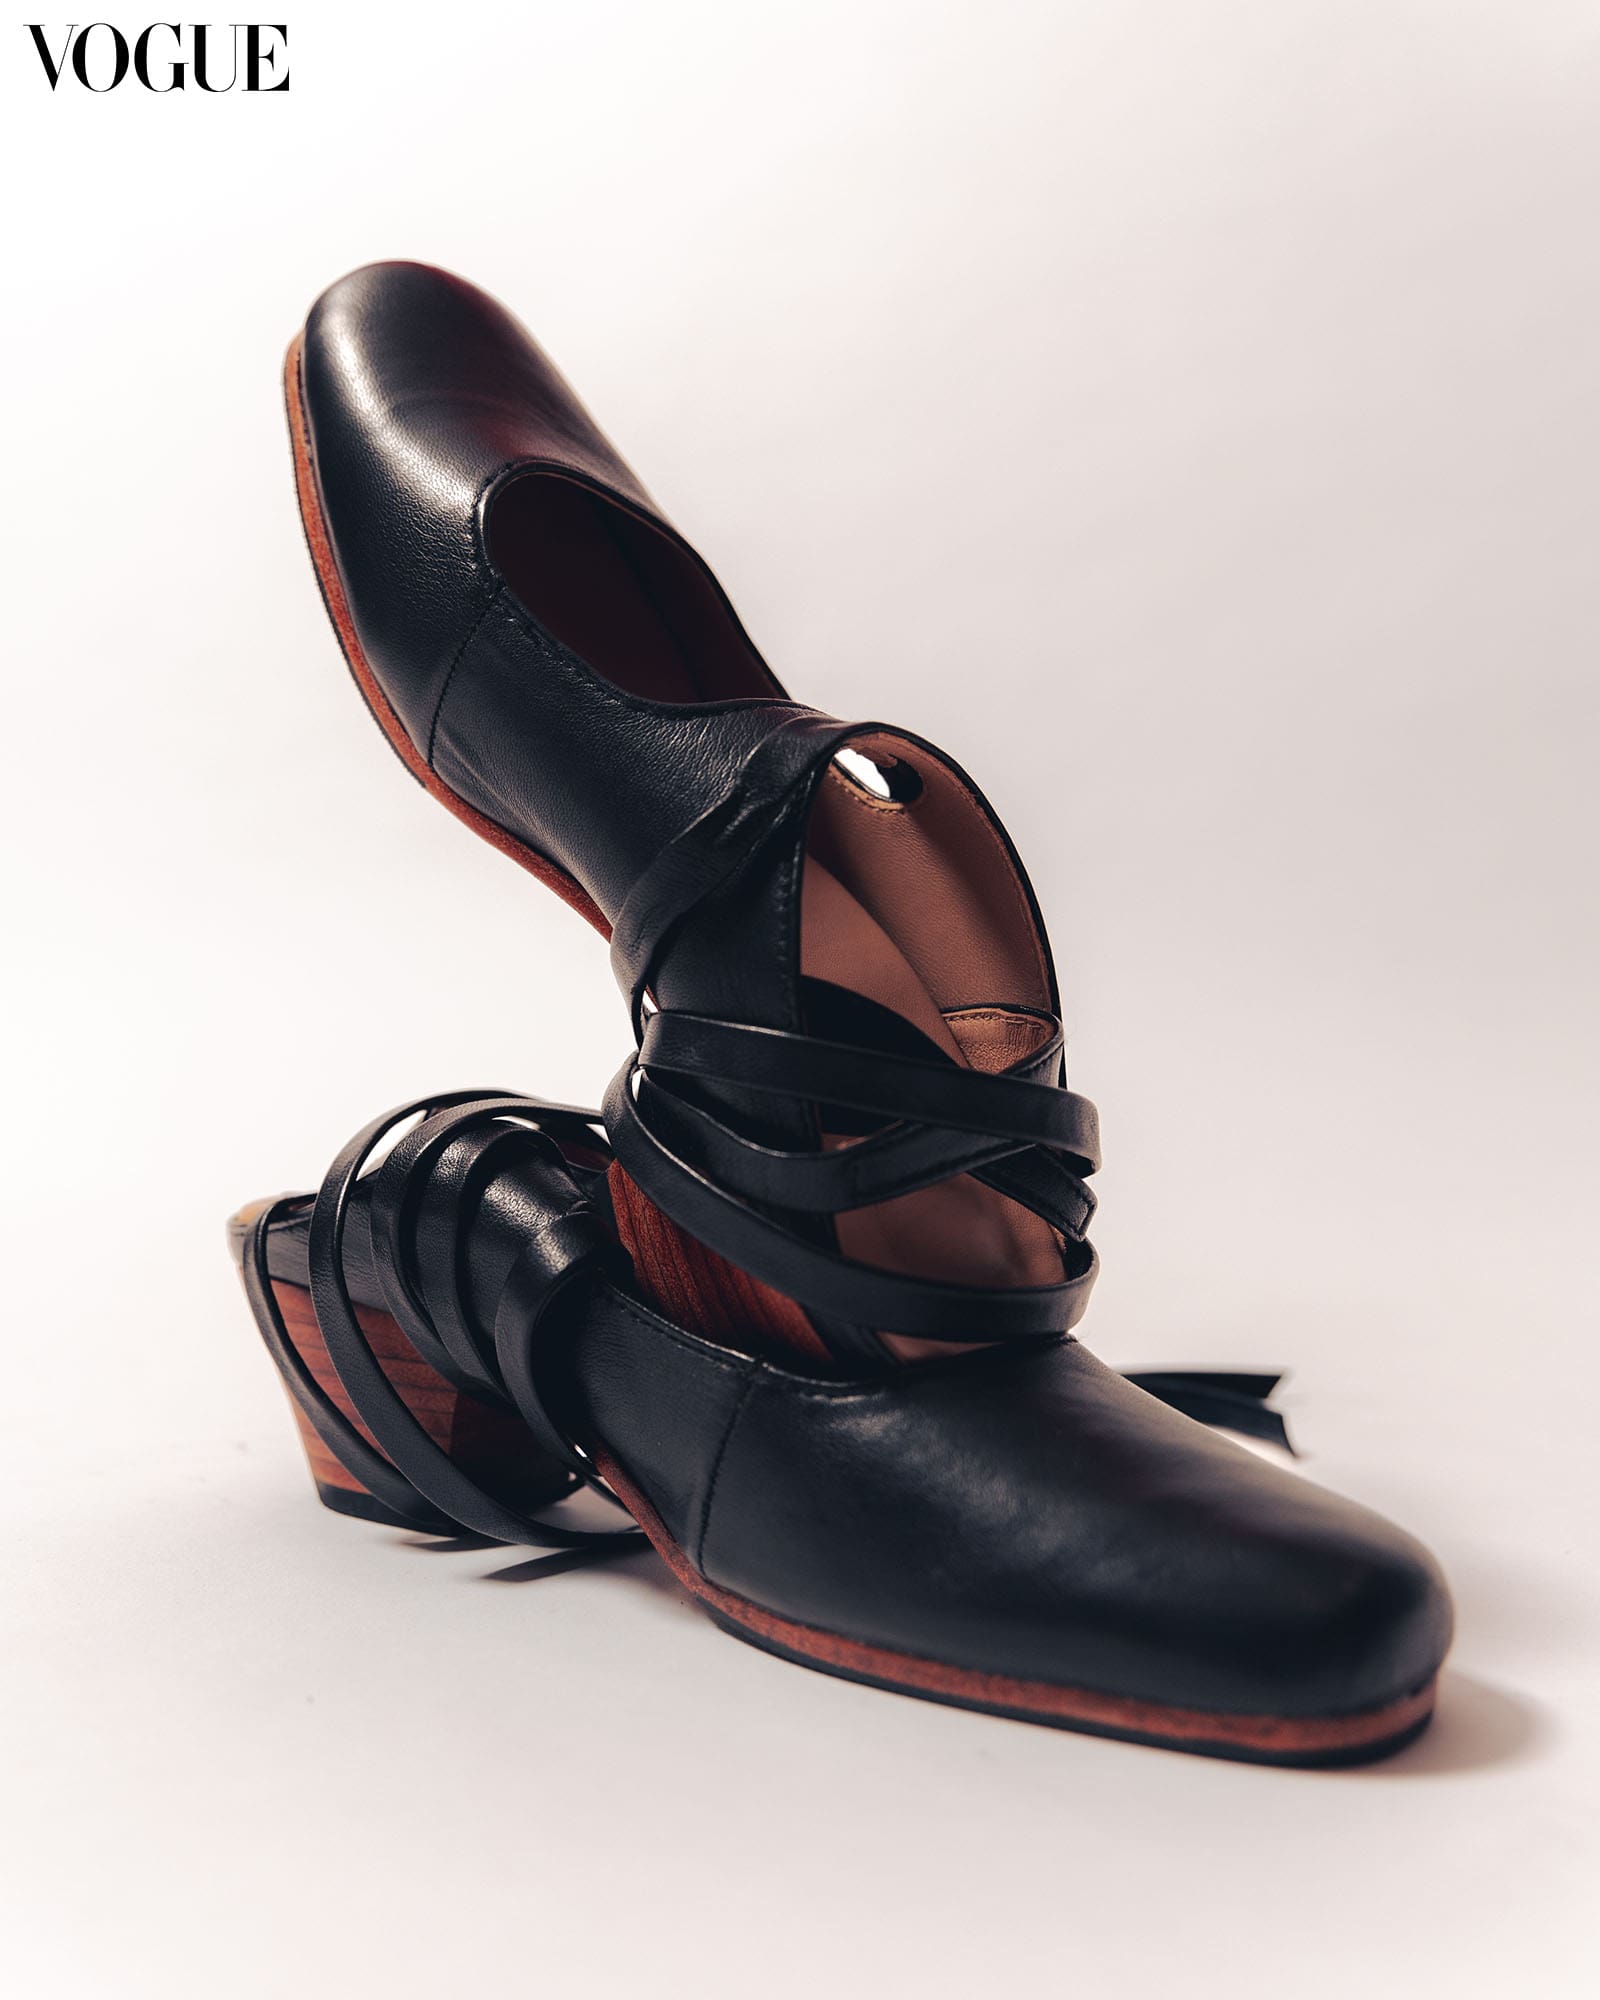 Minsan Objects’ PURA shoes.